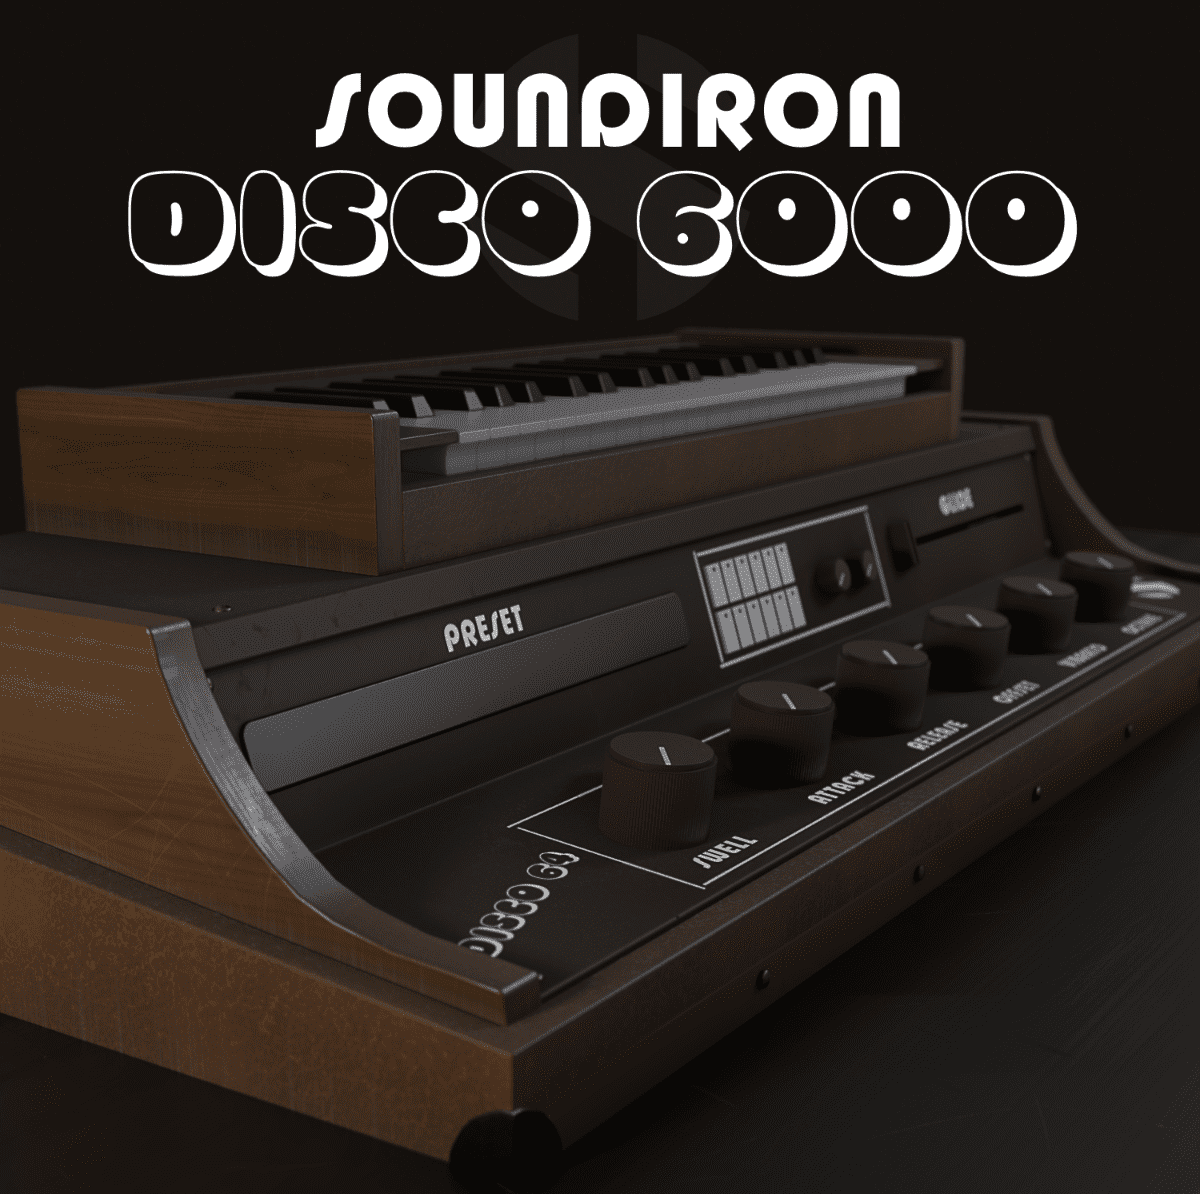 Vintage Keys Series: Disco 6000 by Soundiron